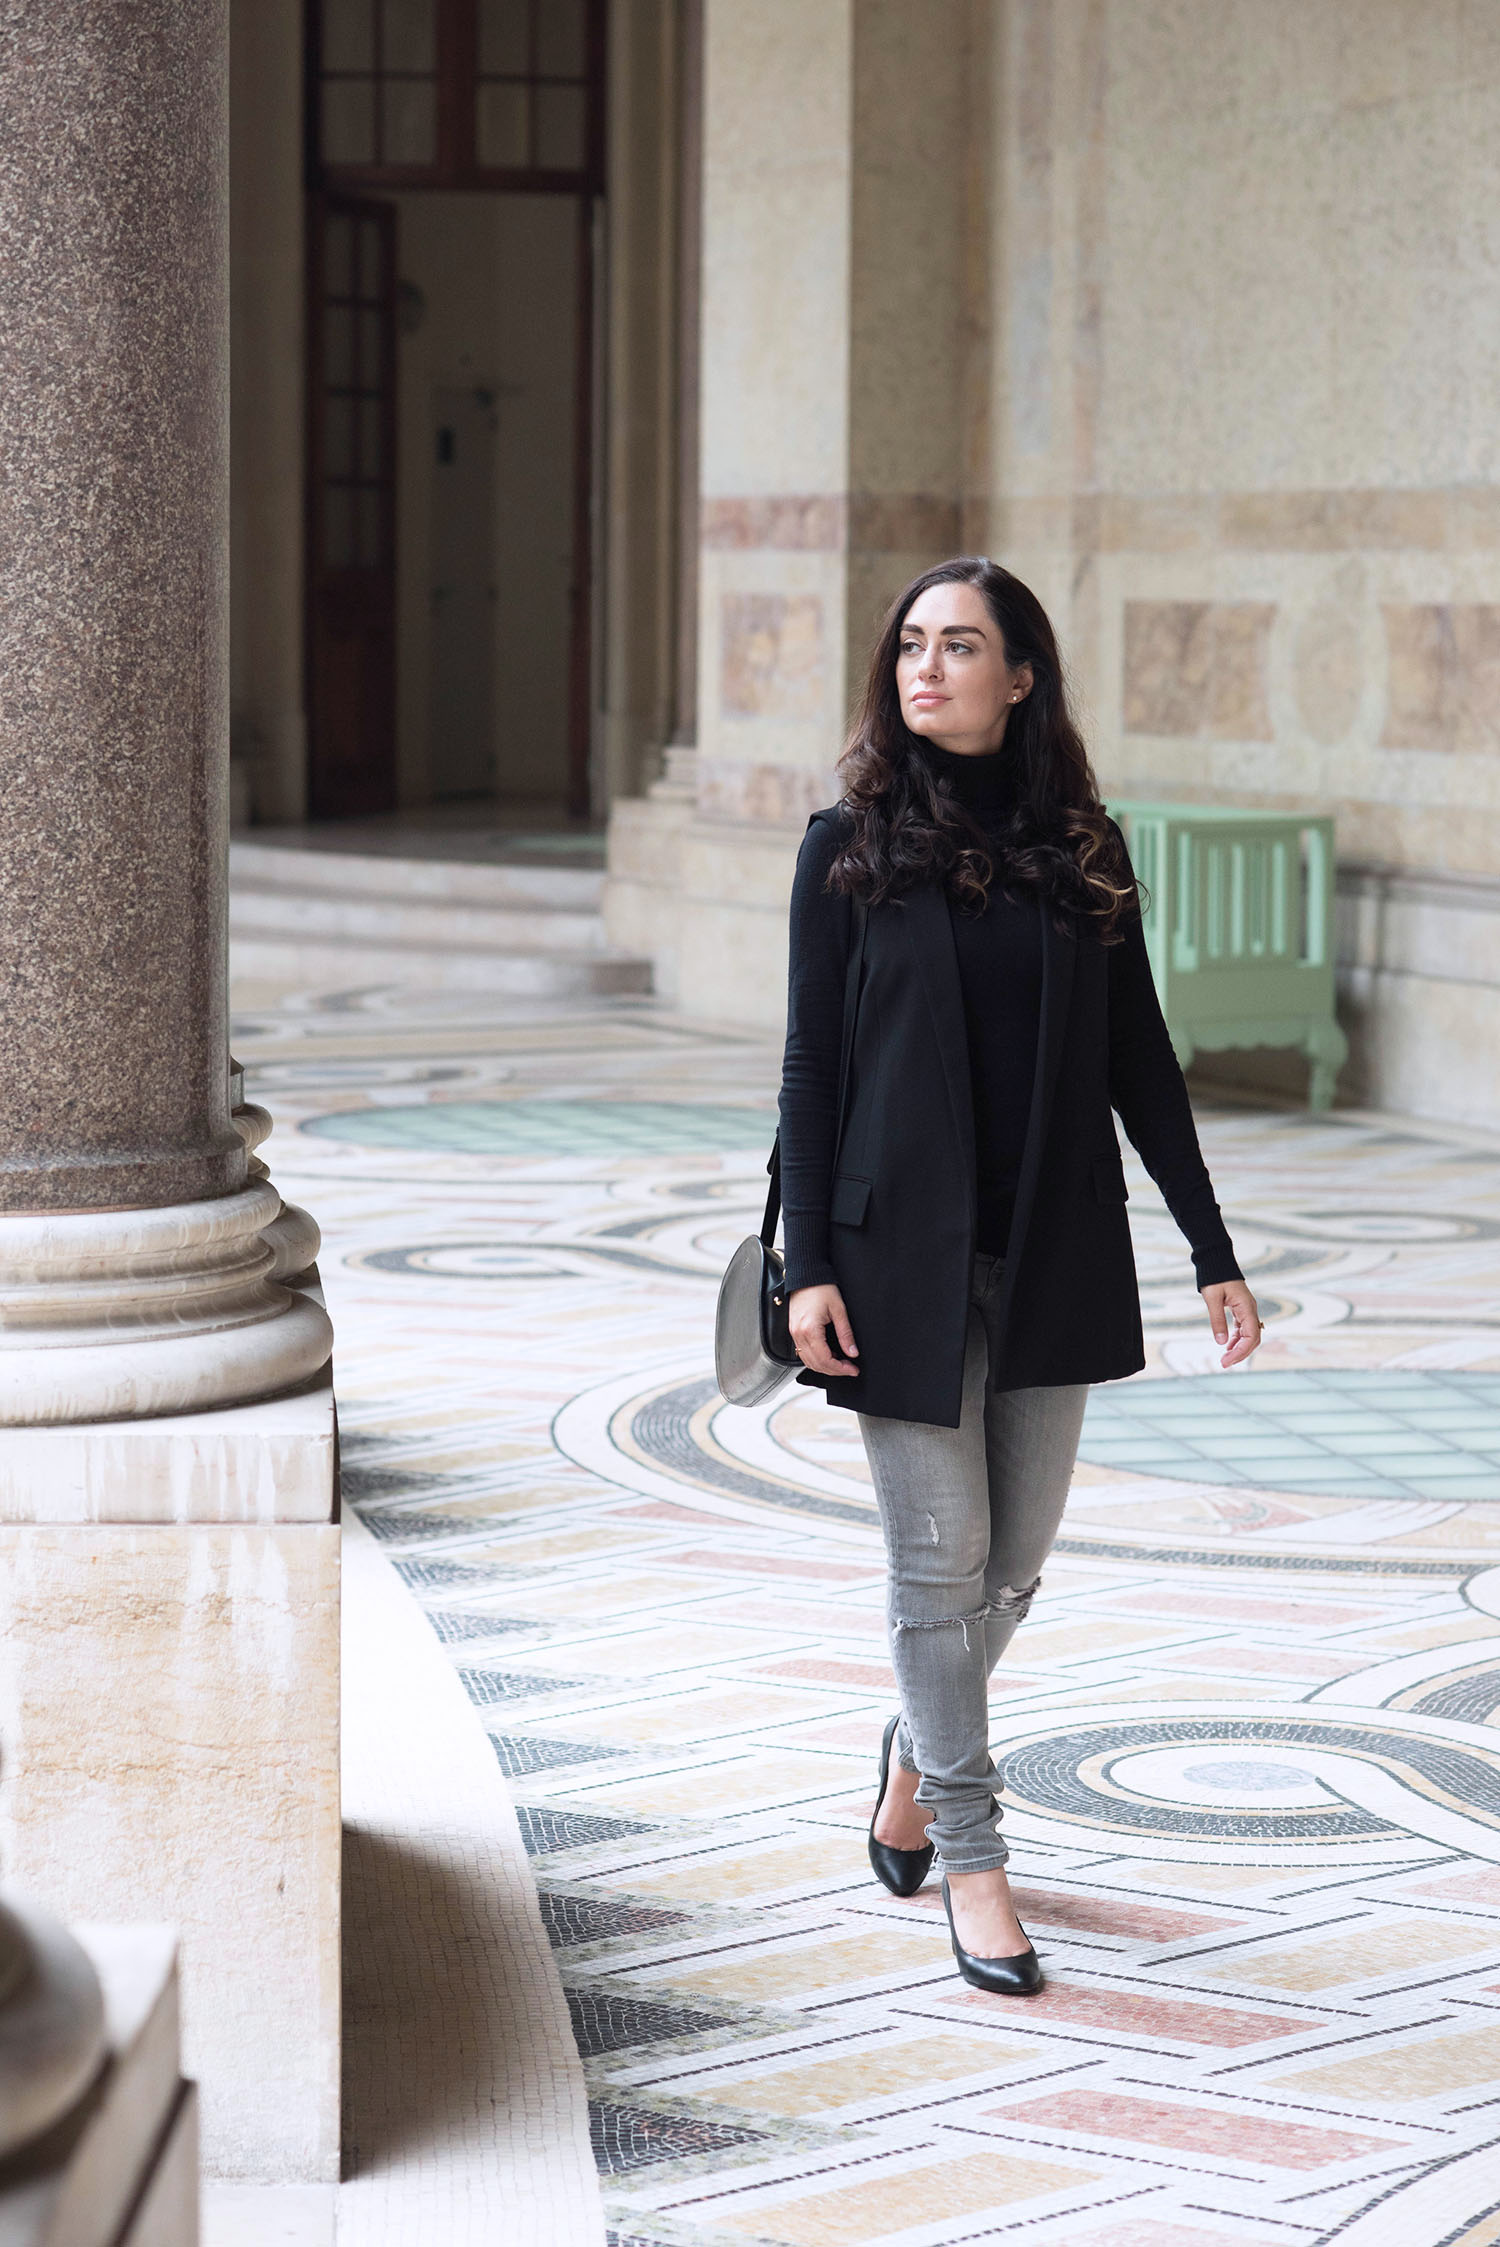 Fashion blogger Cee Fardoe of Coco & Vera walks through the Petit Palais wearing a black Zara waistcoat and grey distressed jeans